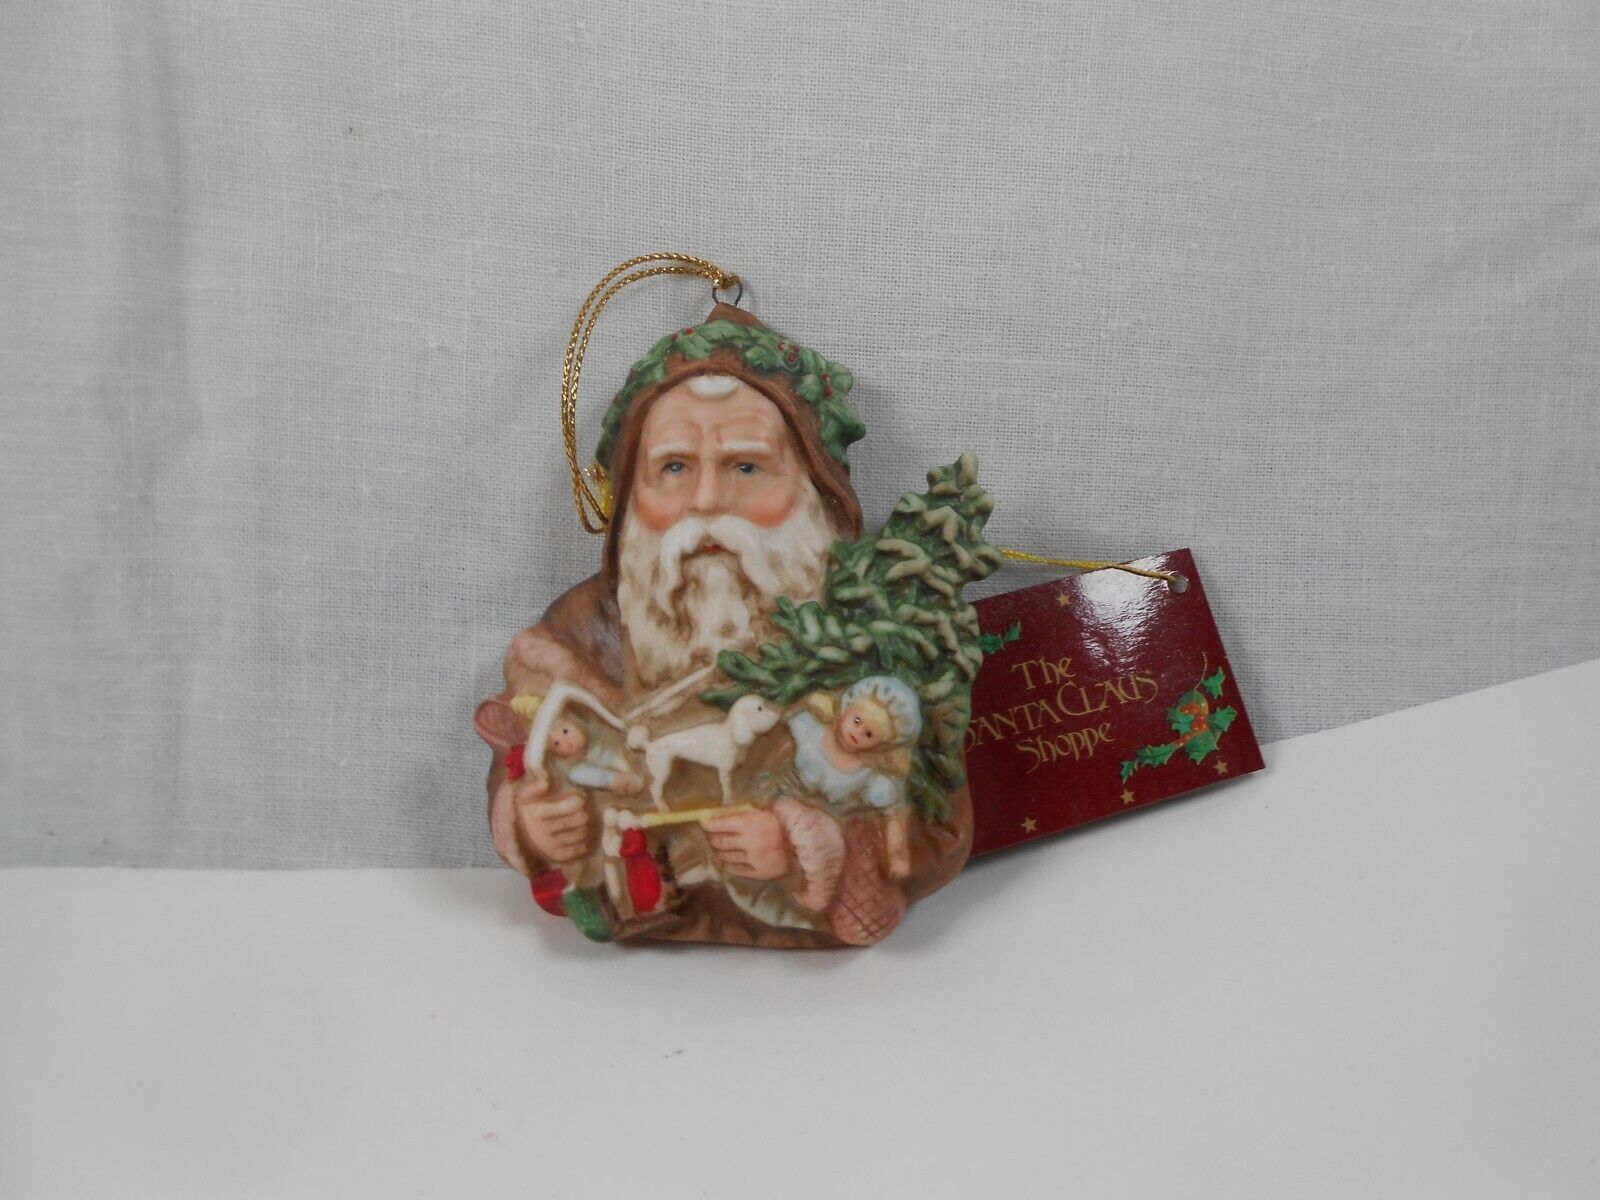 Vintage Enesco John Grossman The Gifted Line Santa Clause Ornament St Nick - $14.00